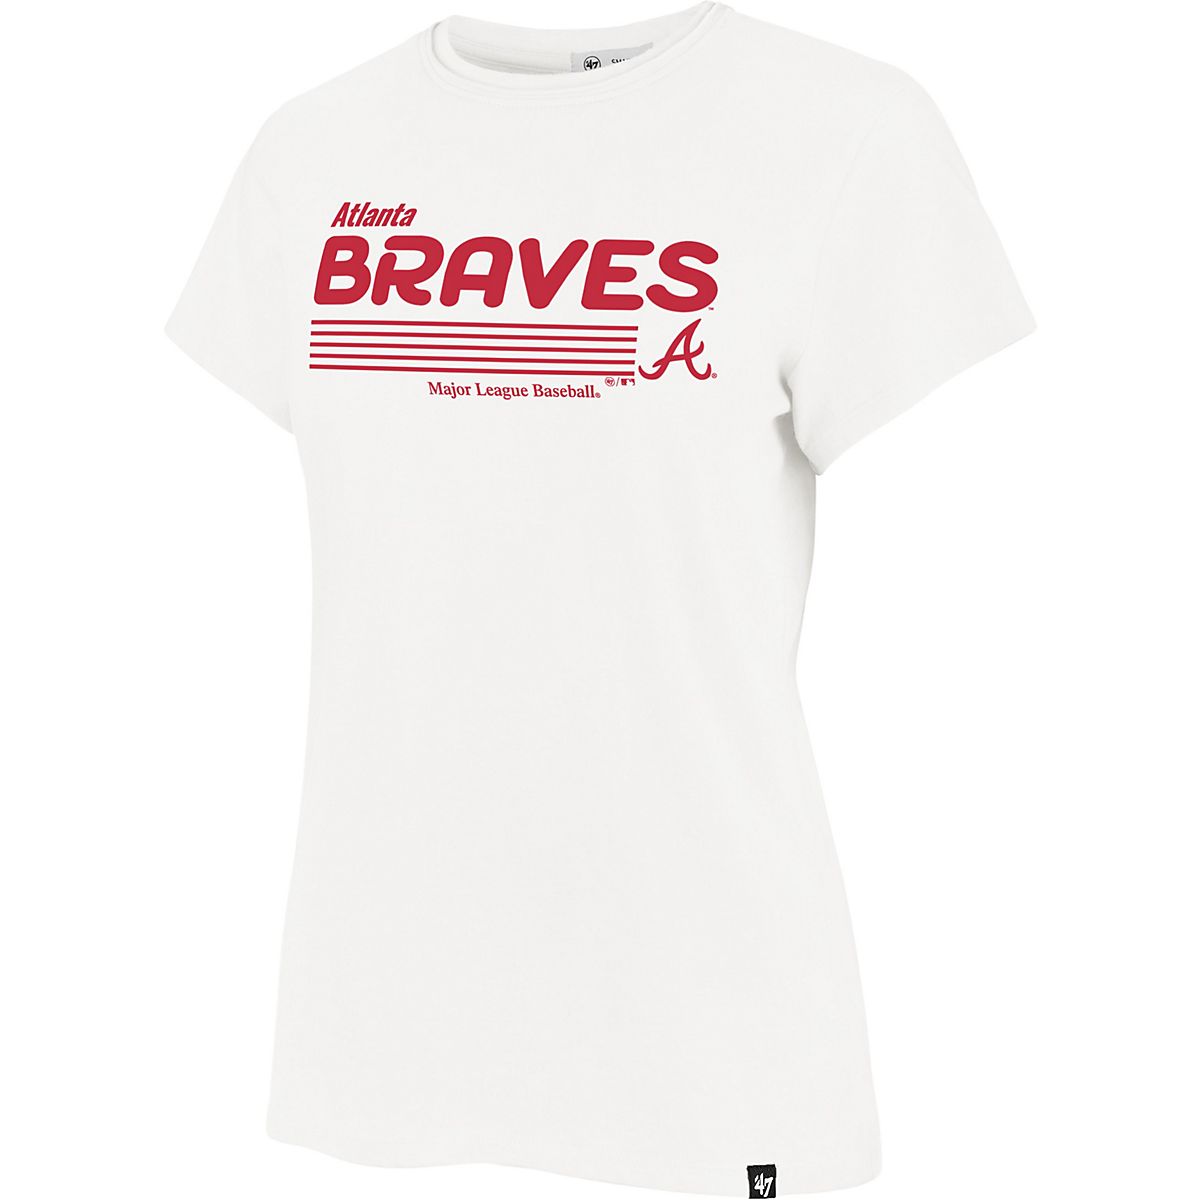 braves shirts at academy sports